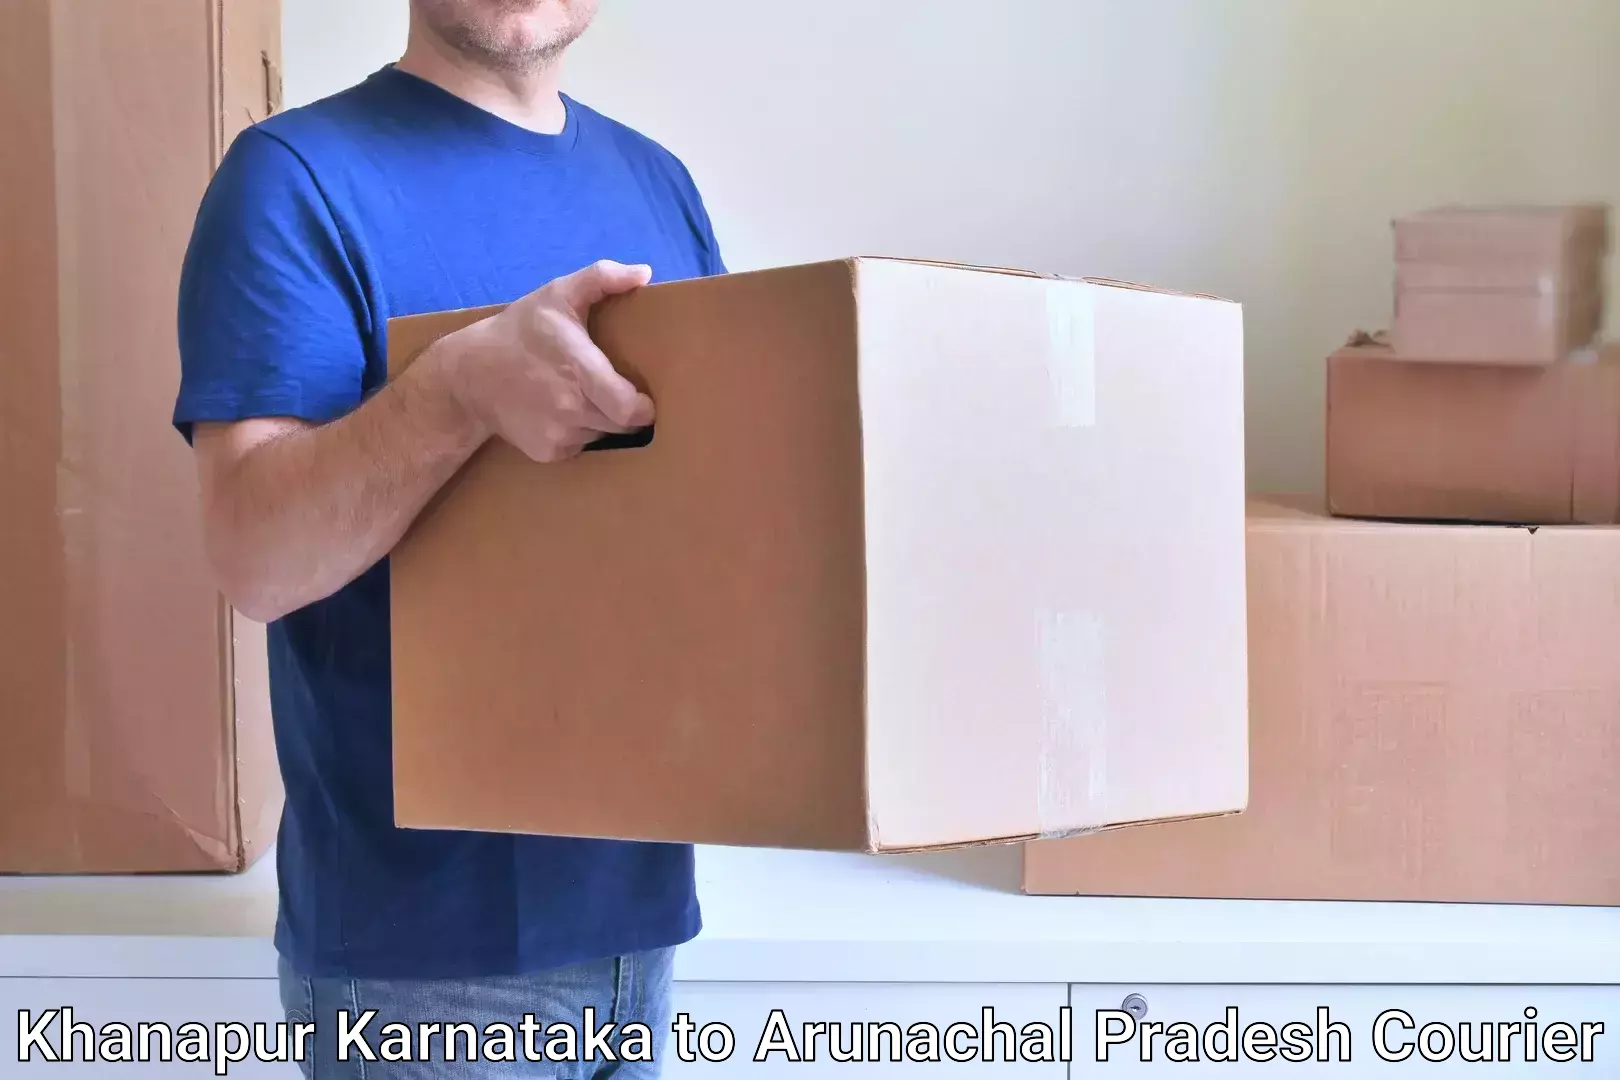 Reliable courier services Khanapur Karnataka to Nirjuli